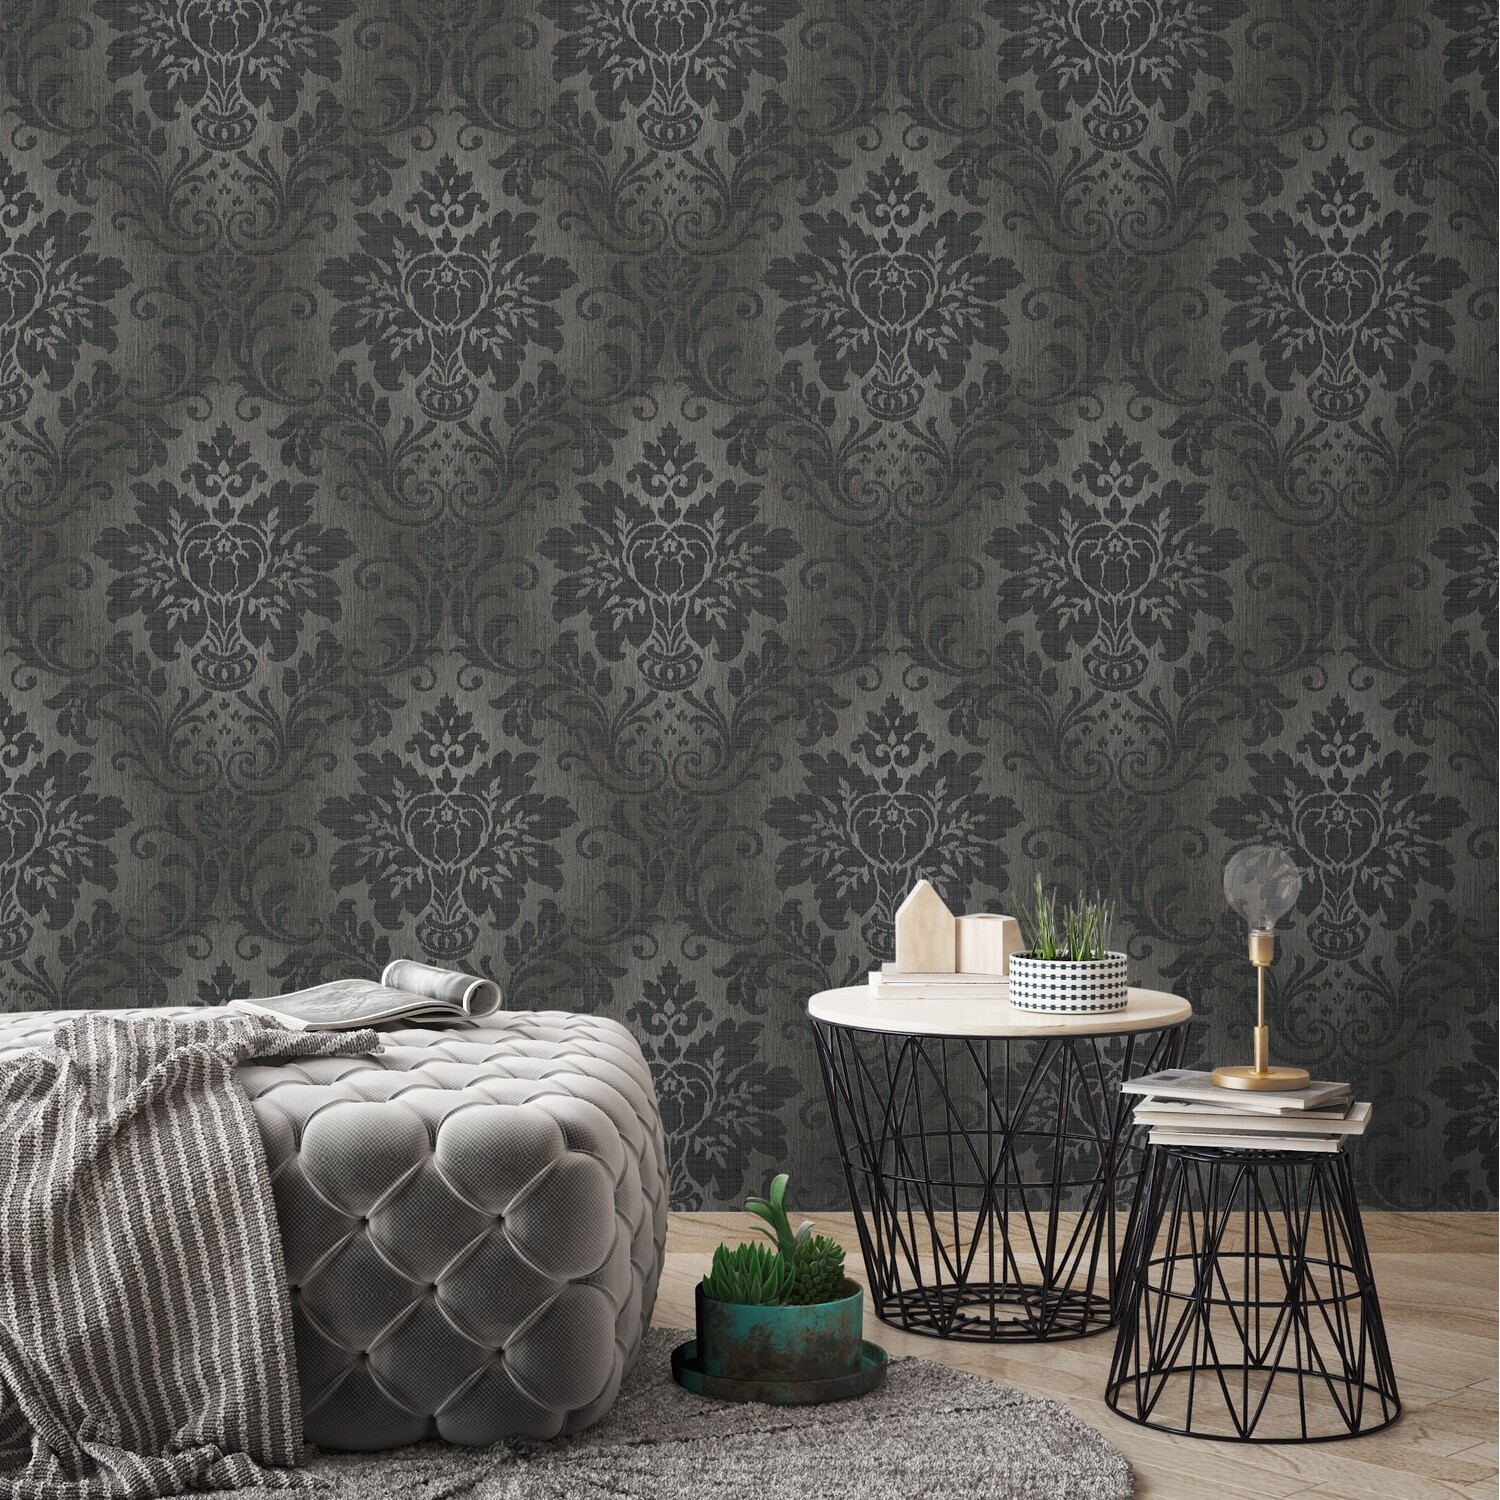 Grandeco Fabric Damask Wallpaper - Charcoal Image 2